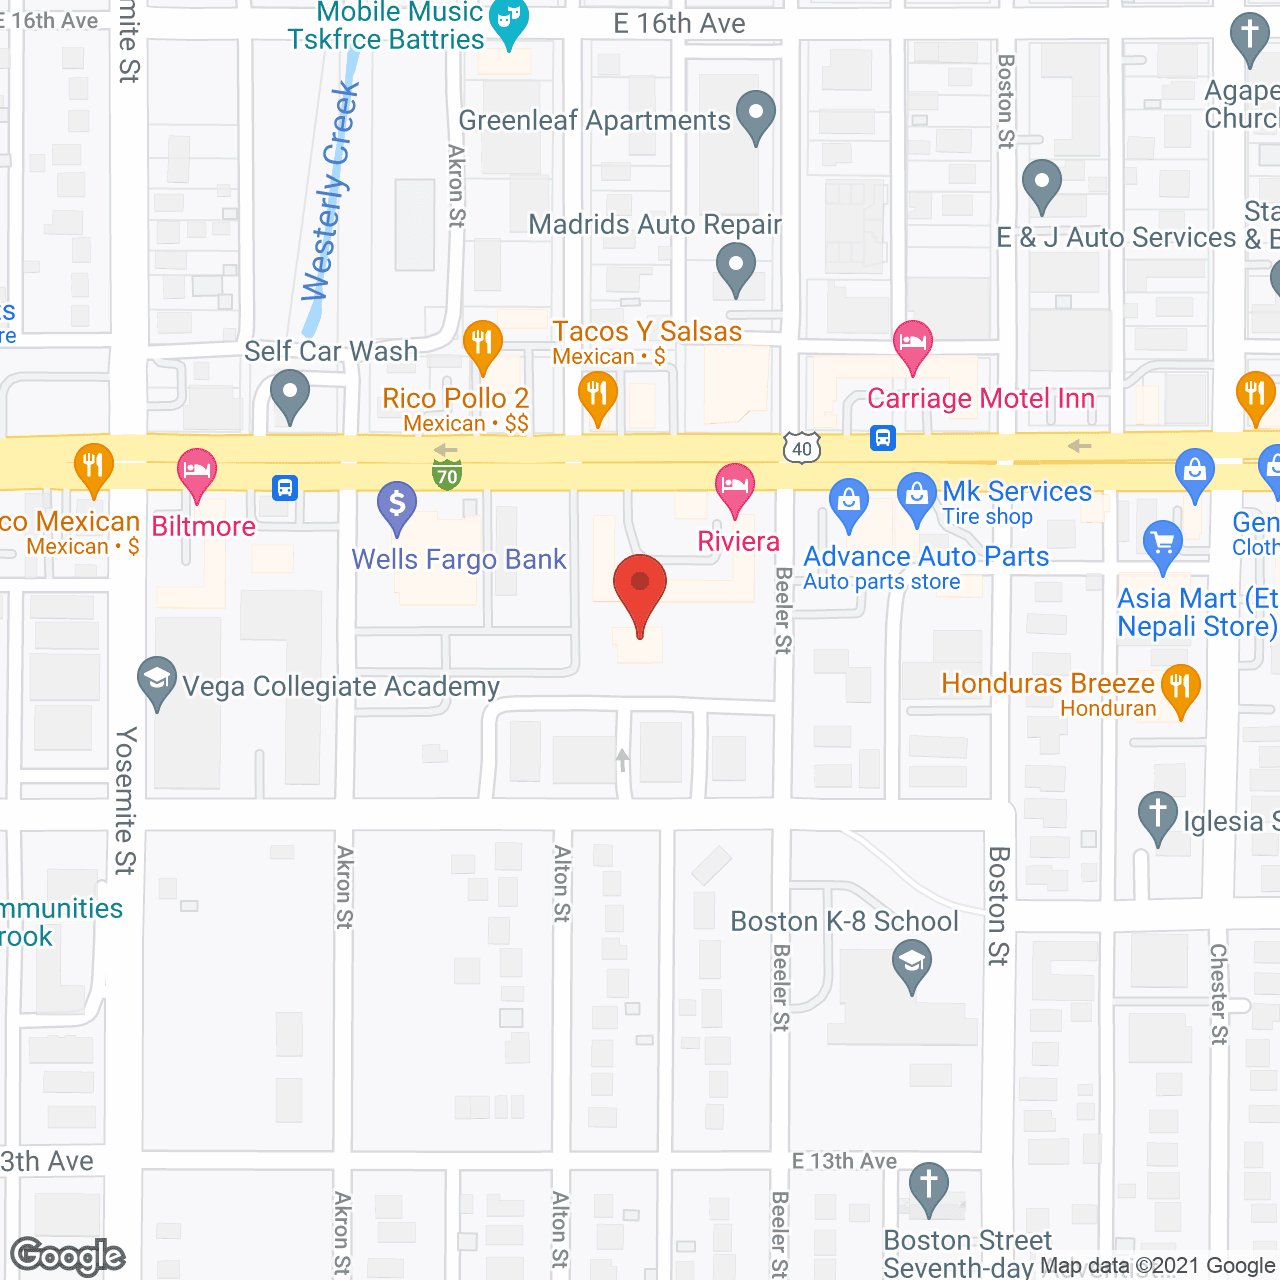 Beeler Street House in google map